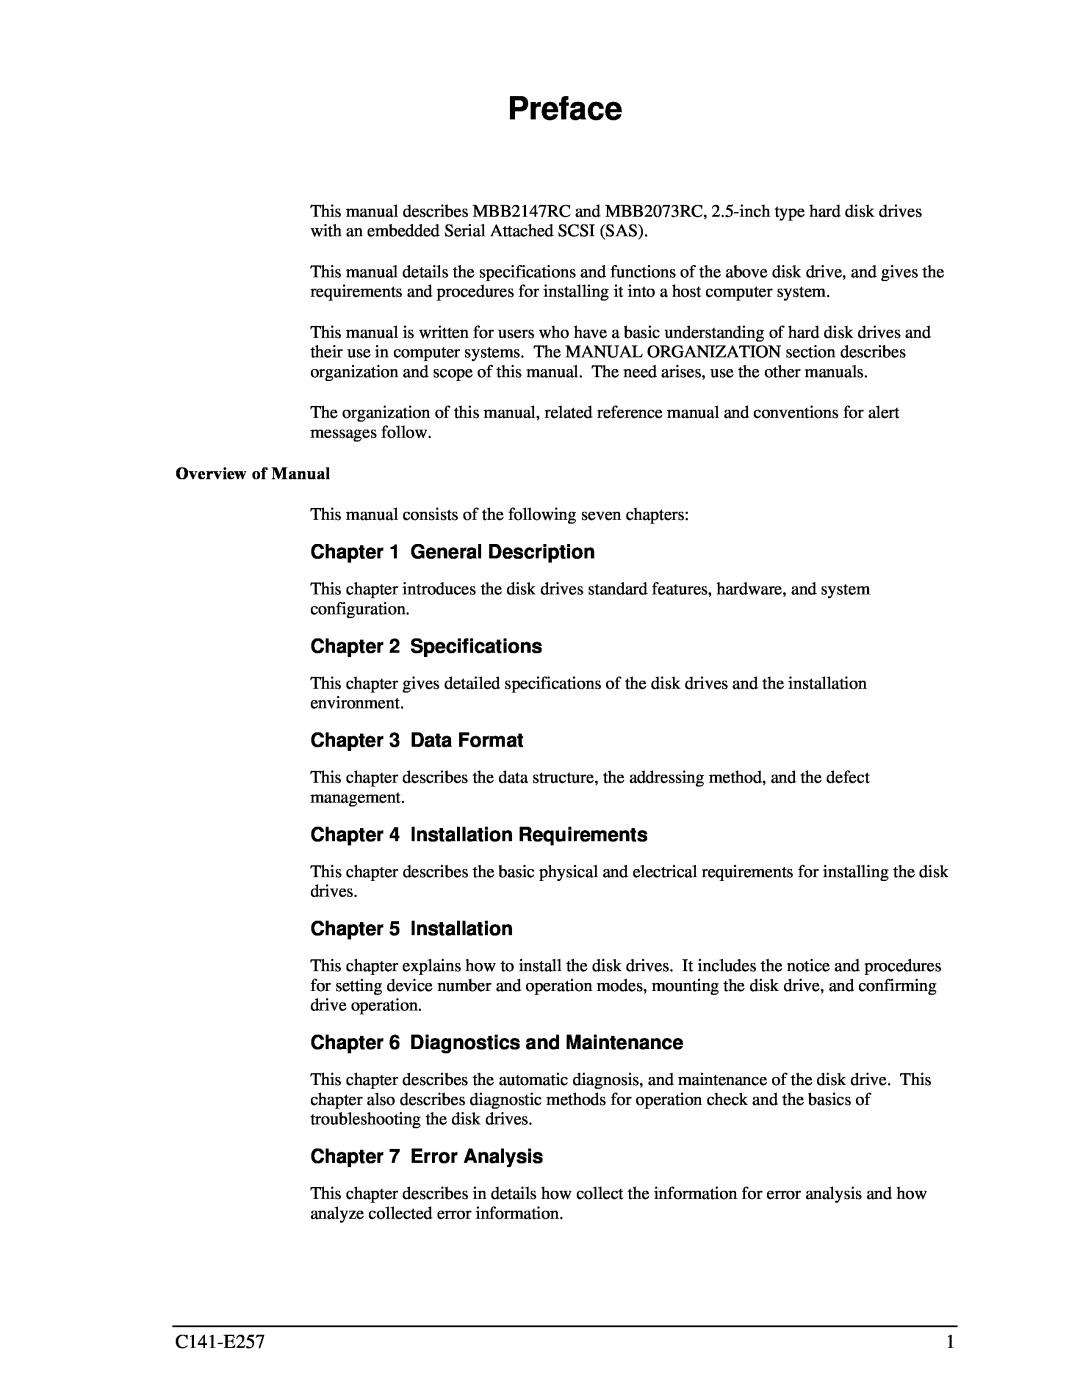 Fujitsu MBB2073RC Preface, General Description, Specifications, Data Format, Installation Requirements, Error Analysis 